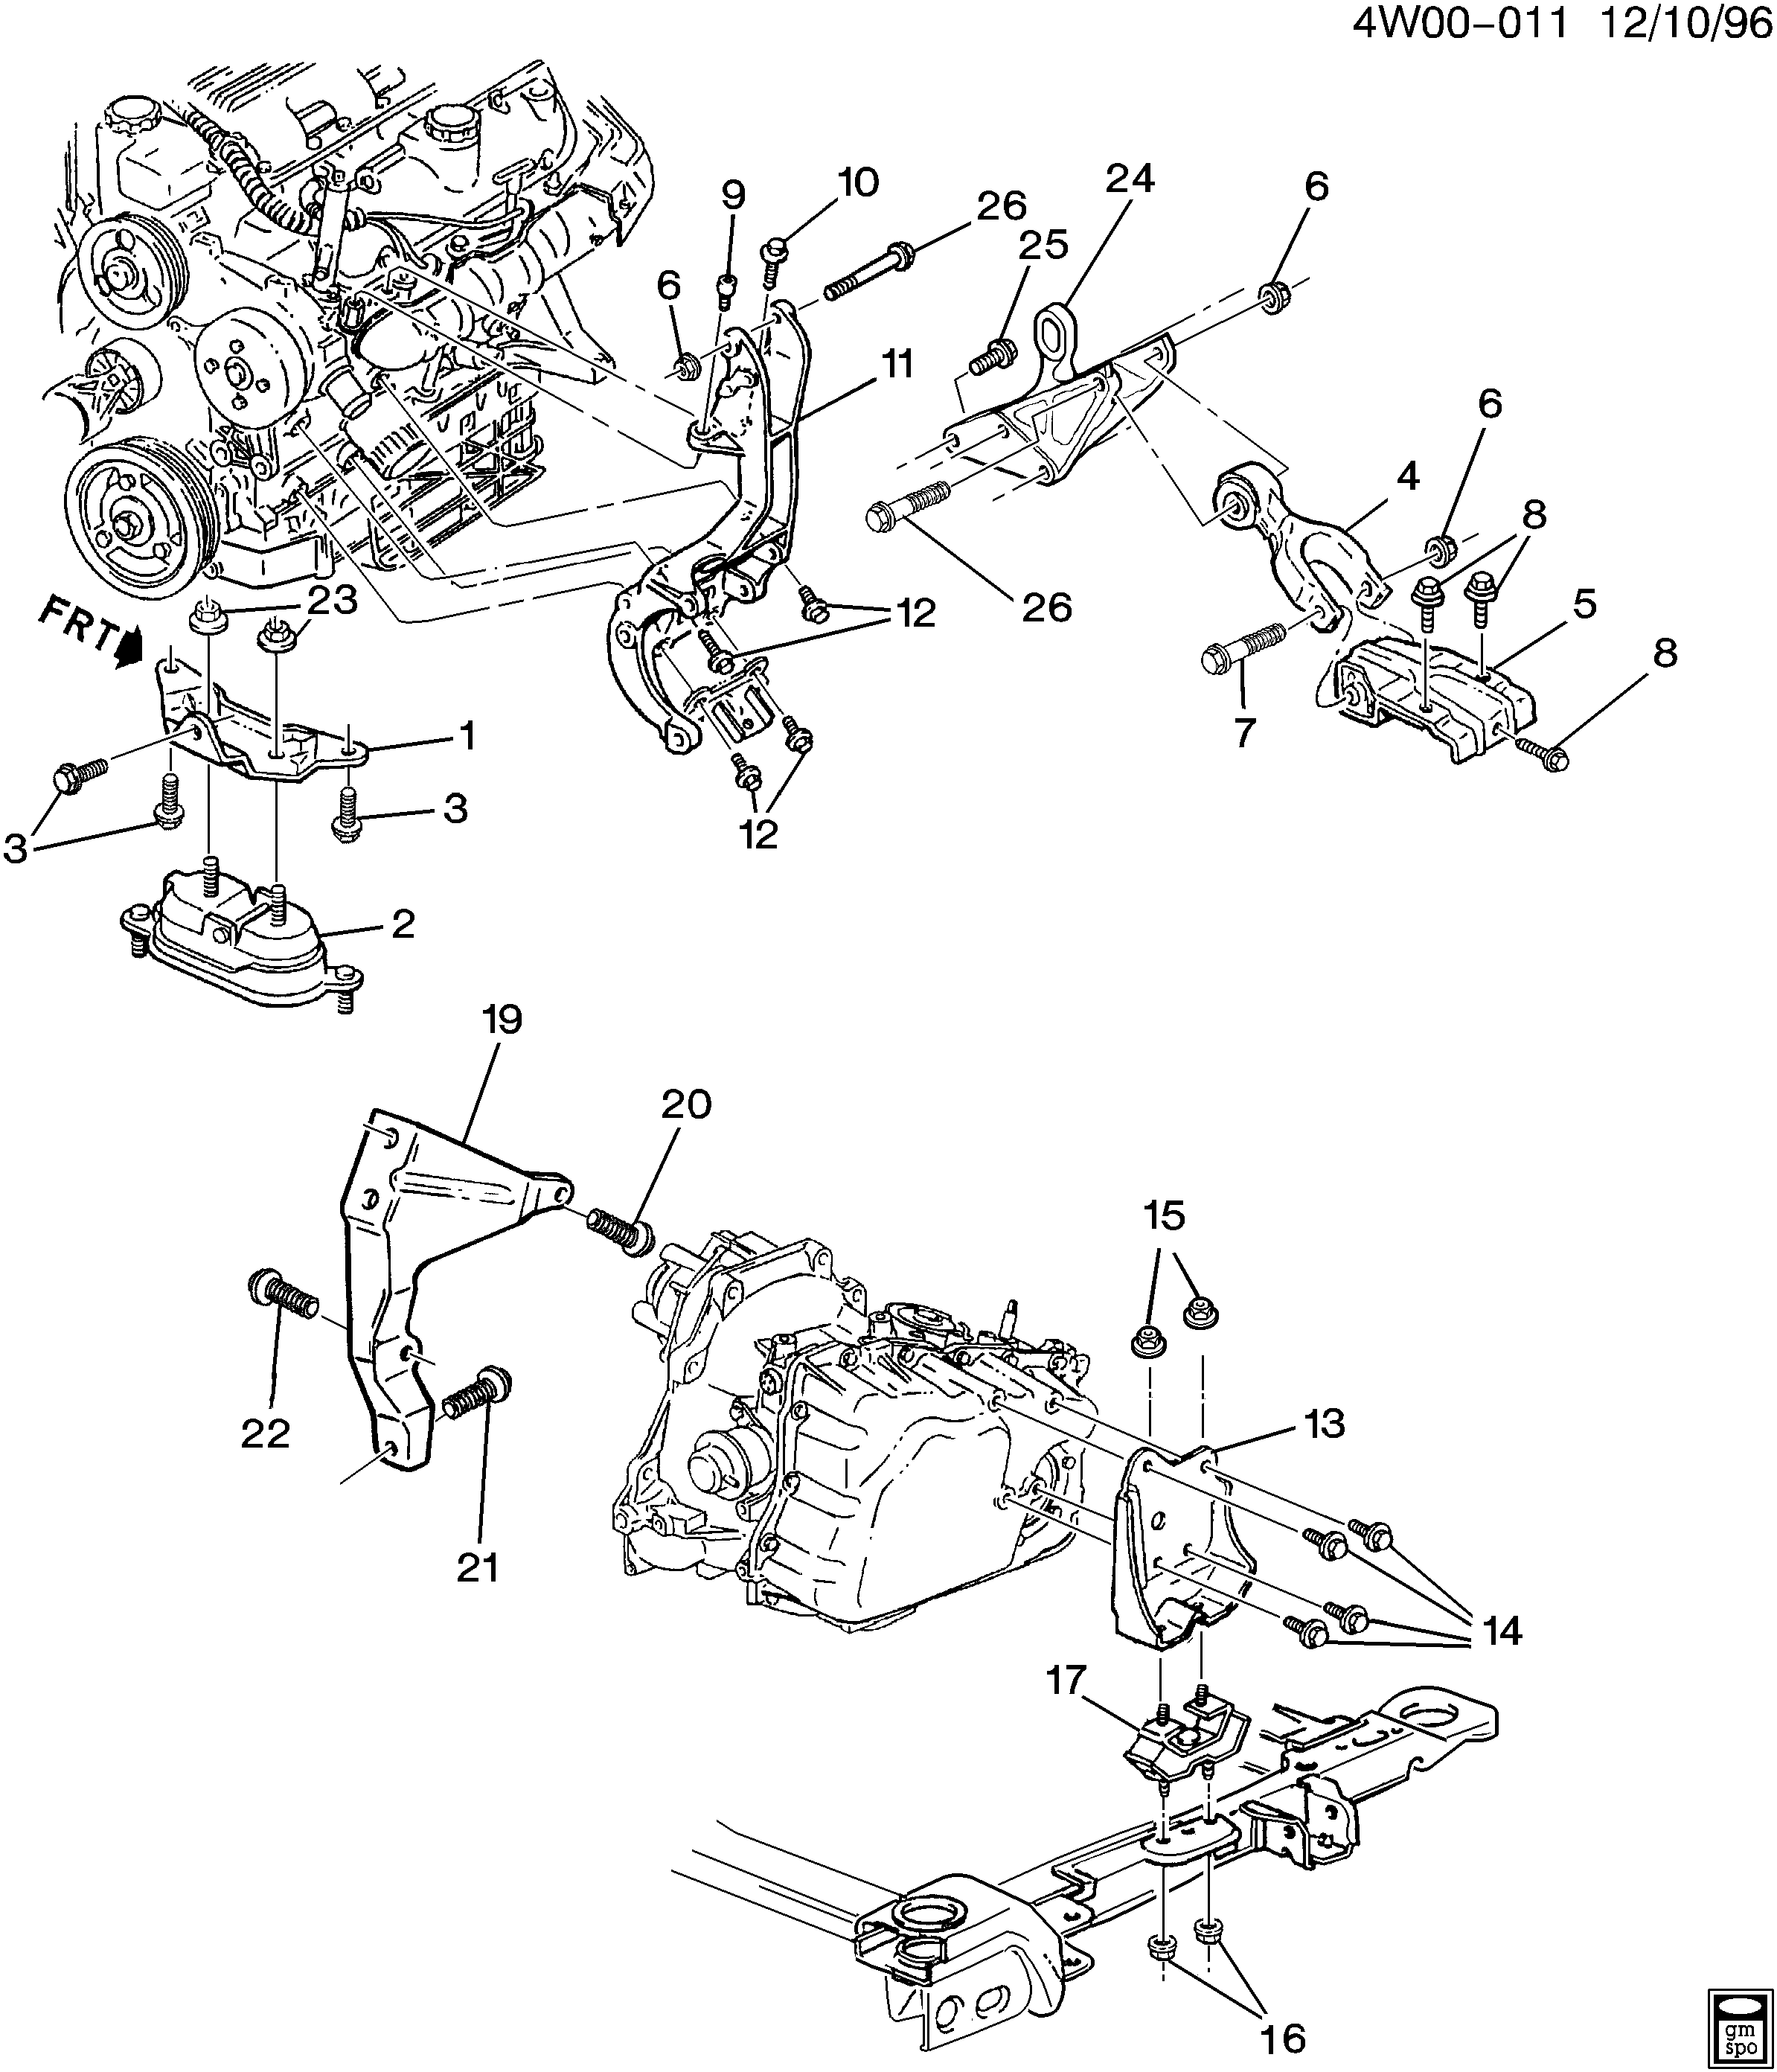 1997-1998 W ENGINE & TRANSMISSION MOUNTING (L82/3.1M)